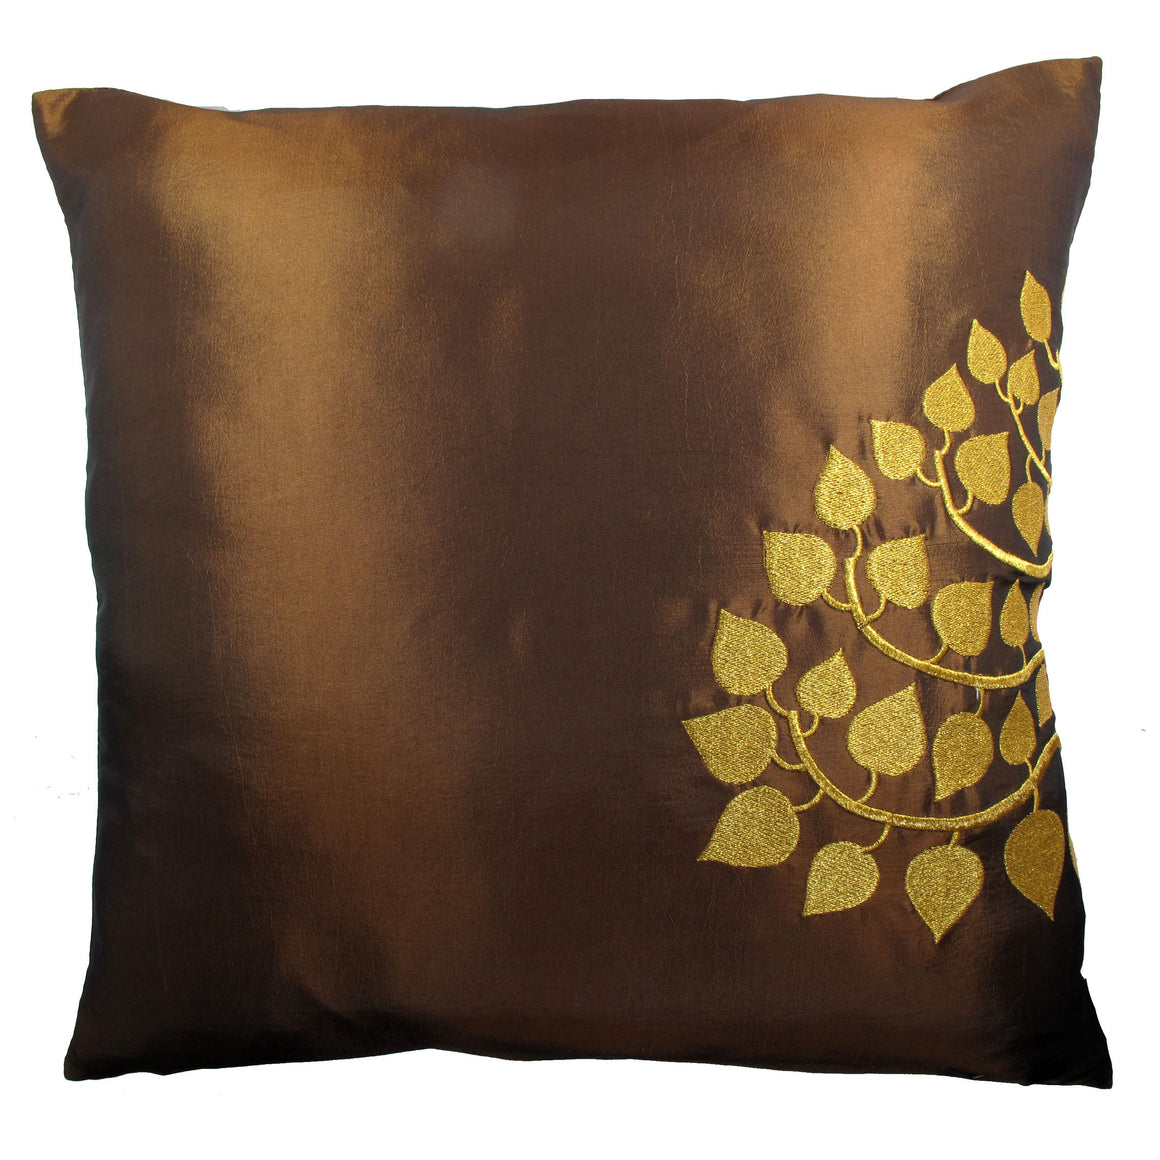 Thai Silk Throw Pillow Cover, Bodhi Design, Medium Brown - TropicaZona